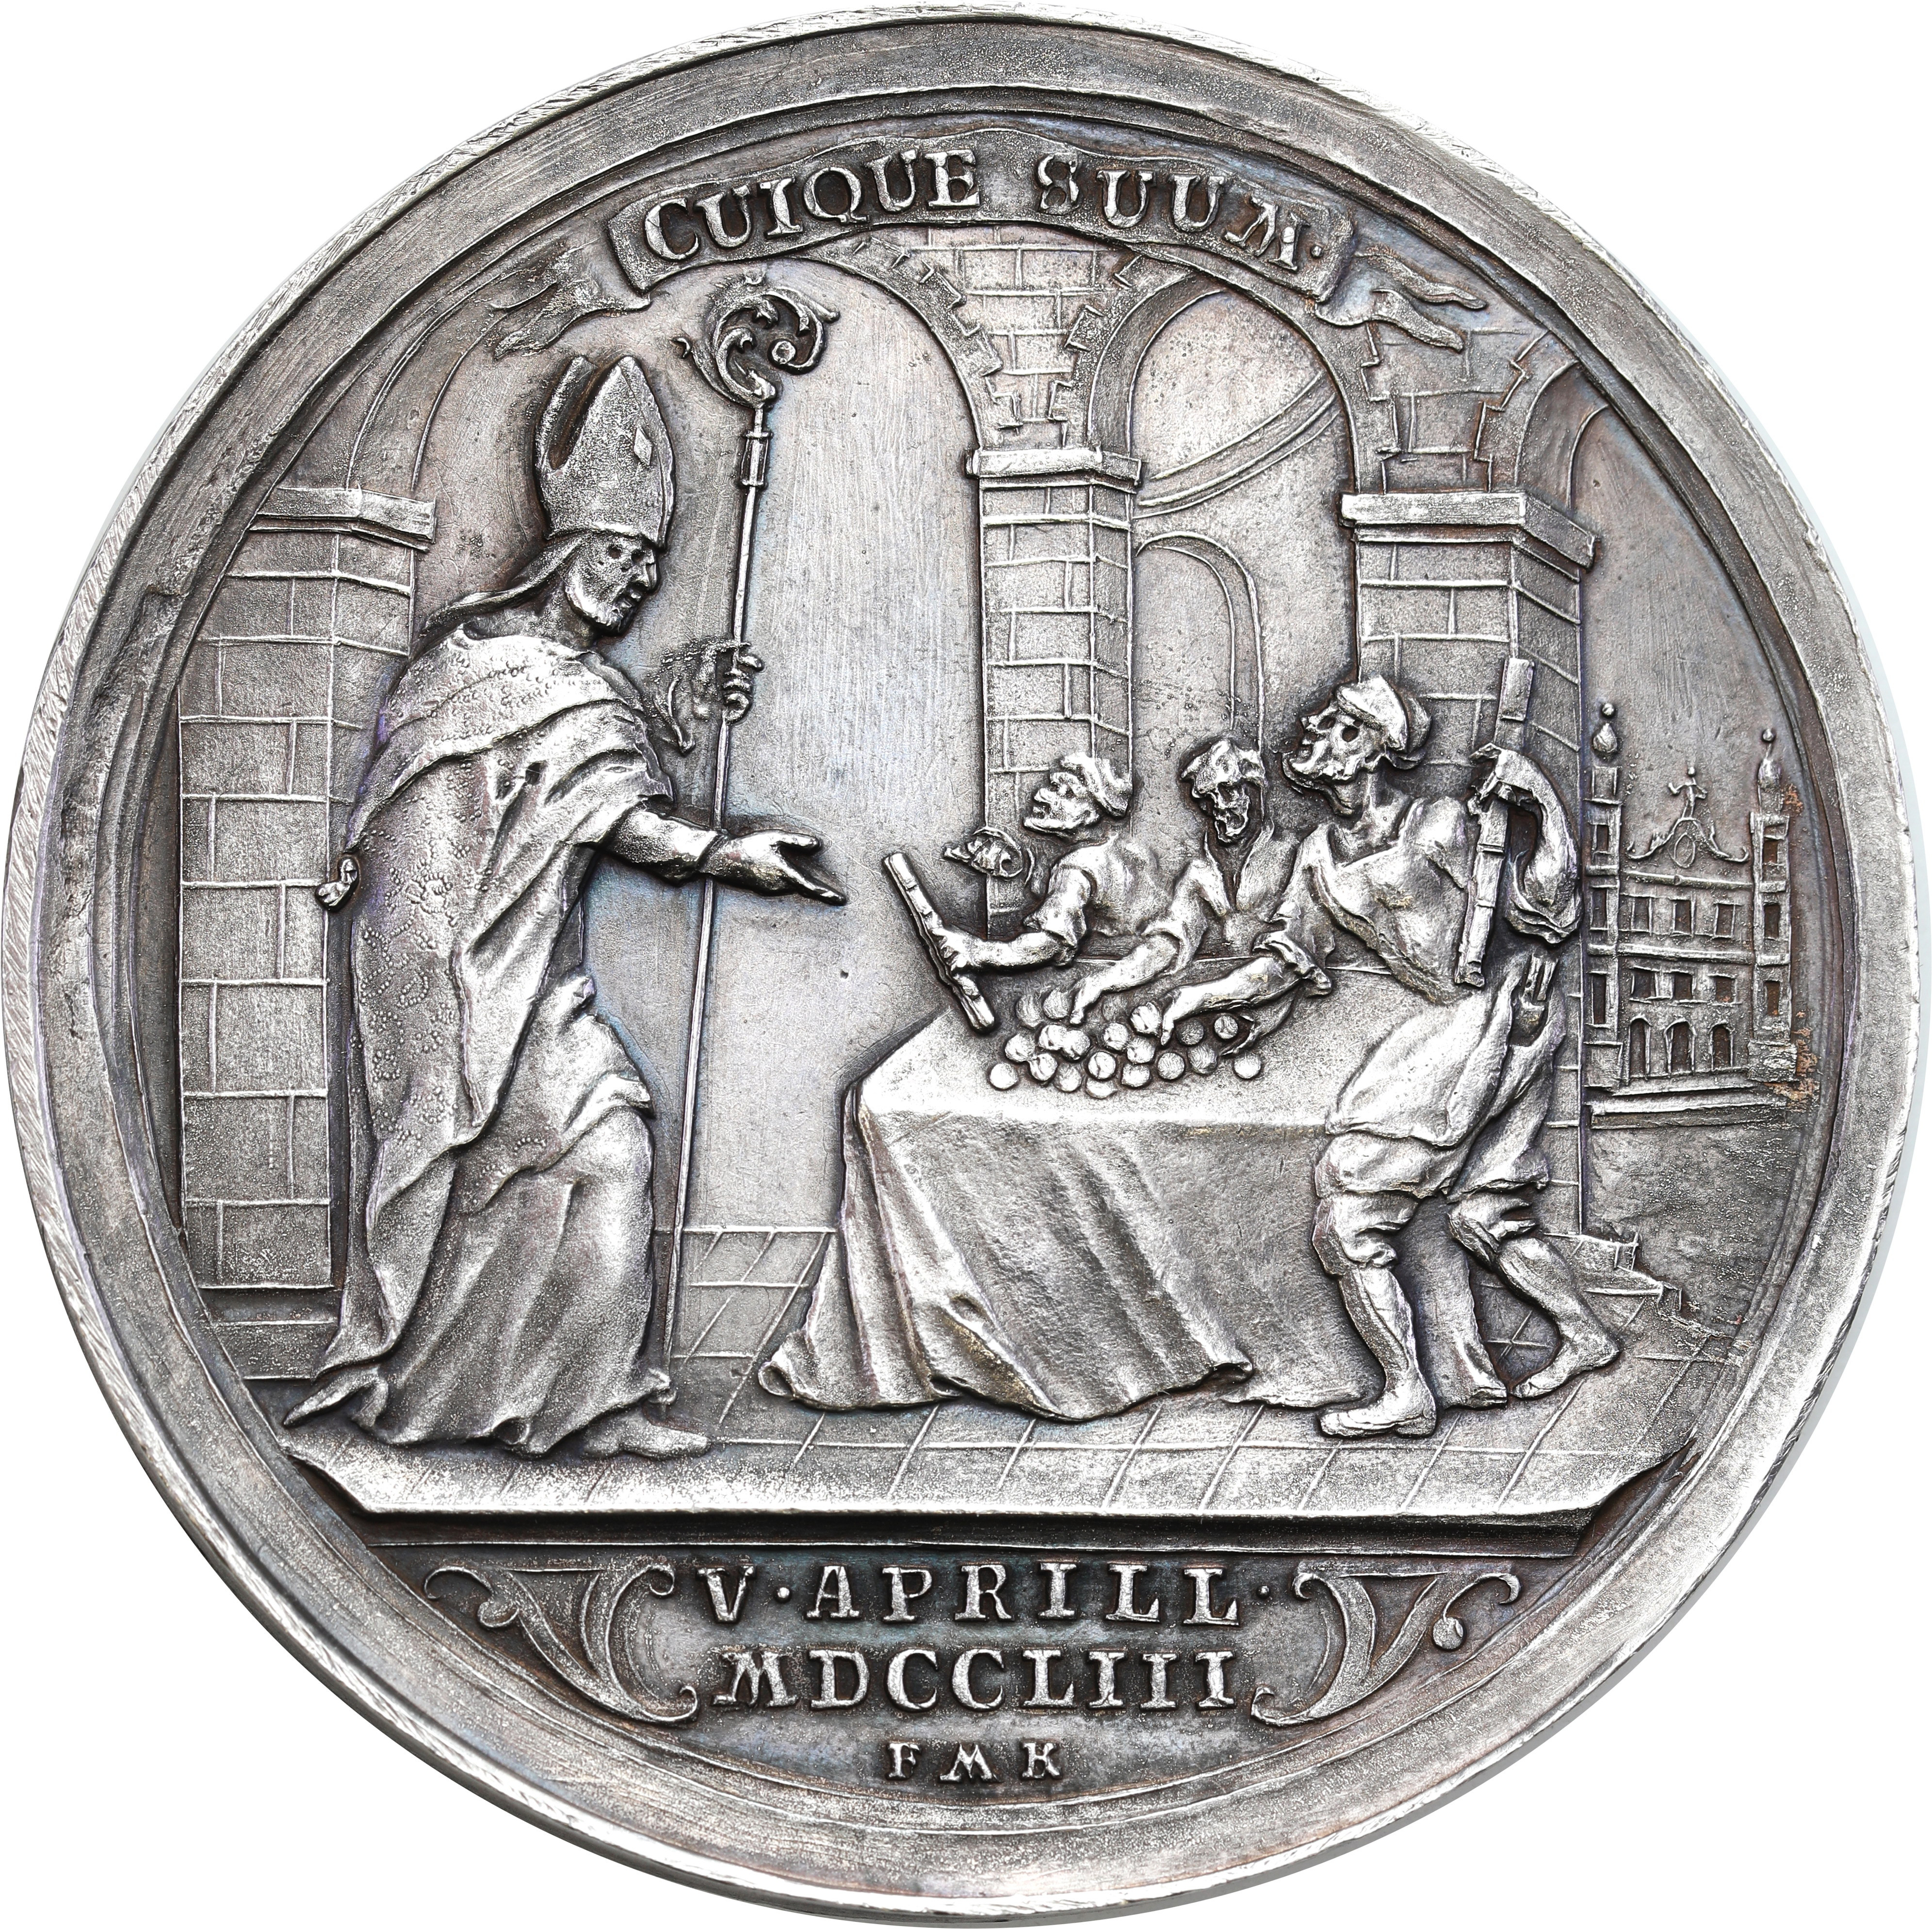 Niemcy. Salzburg, Archidiecezja. Medal Zygmunt III von Schrattenbacha 1753-1771 – SREBRO - RZADKOŚĆ